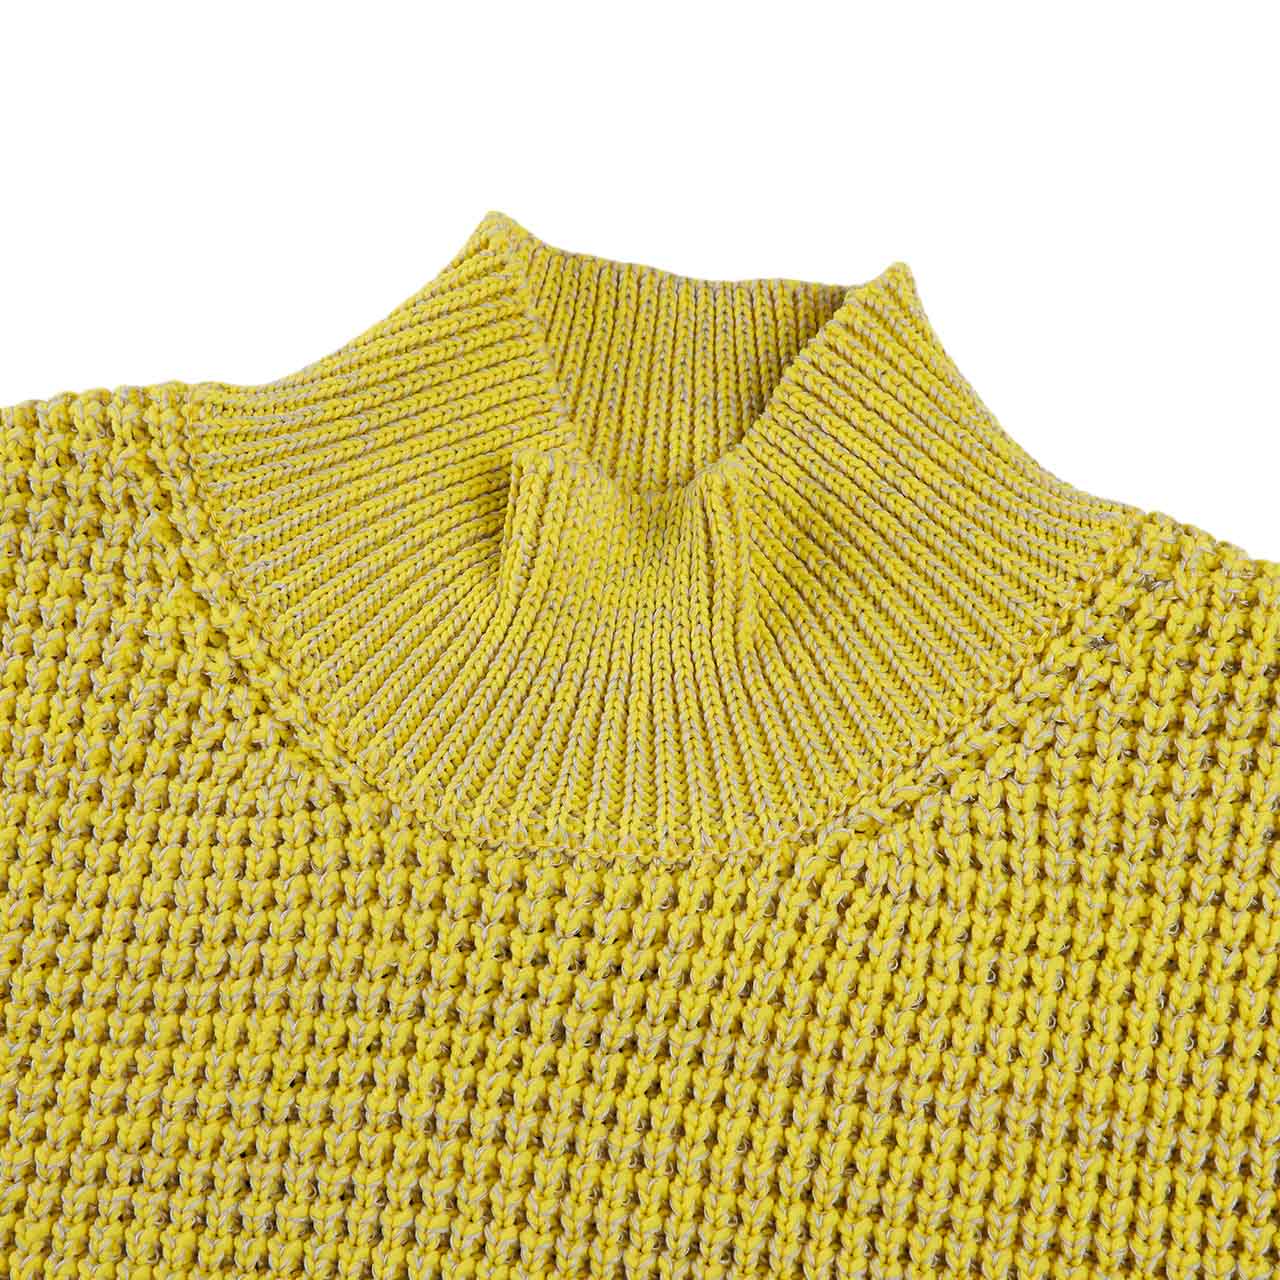 cav empt mix colour waffle vest (yellow)